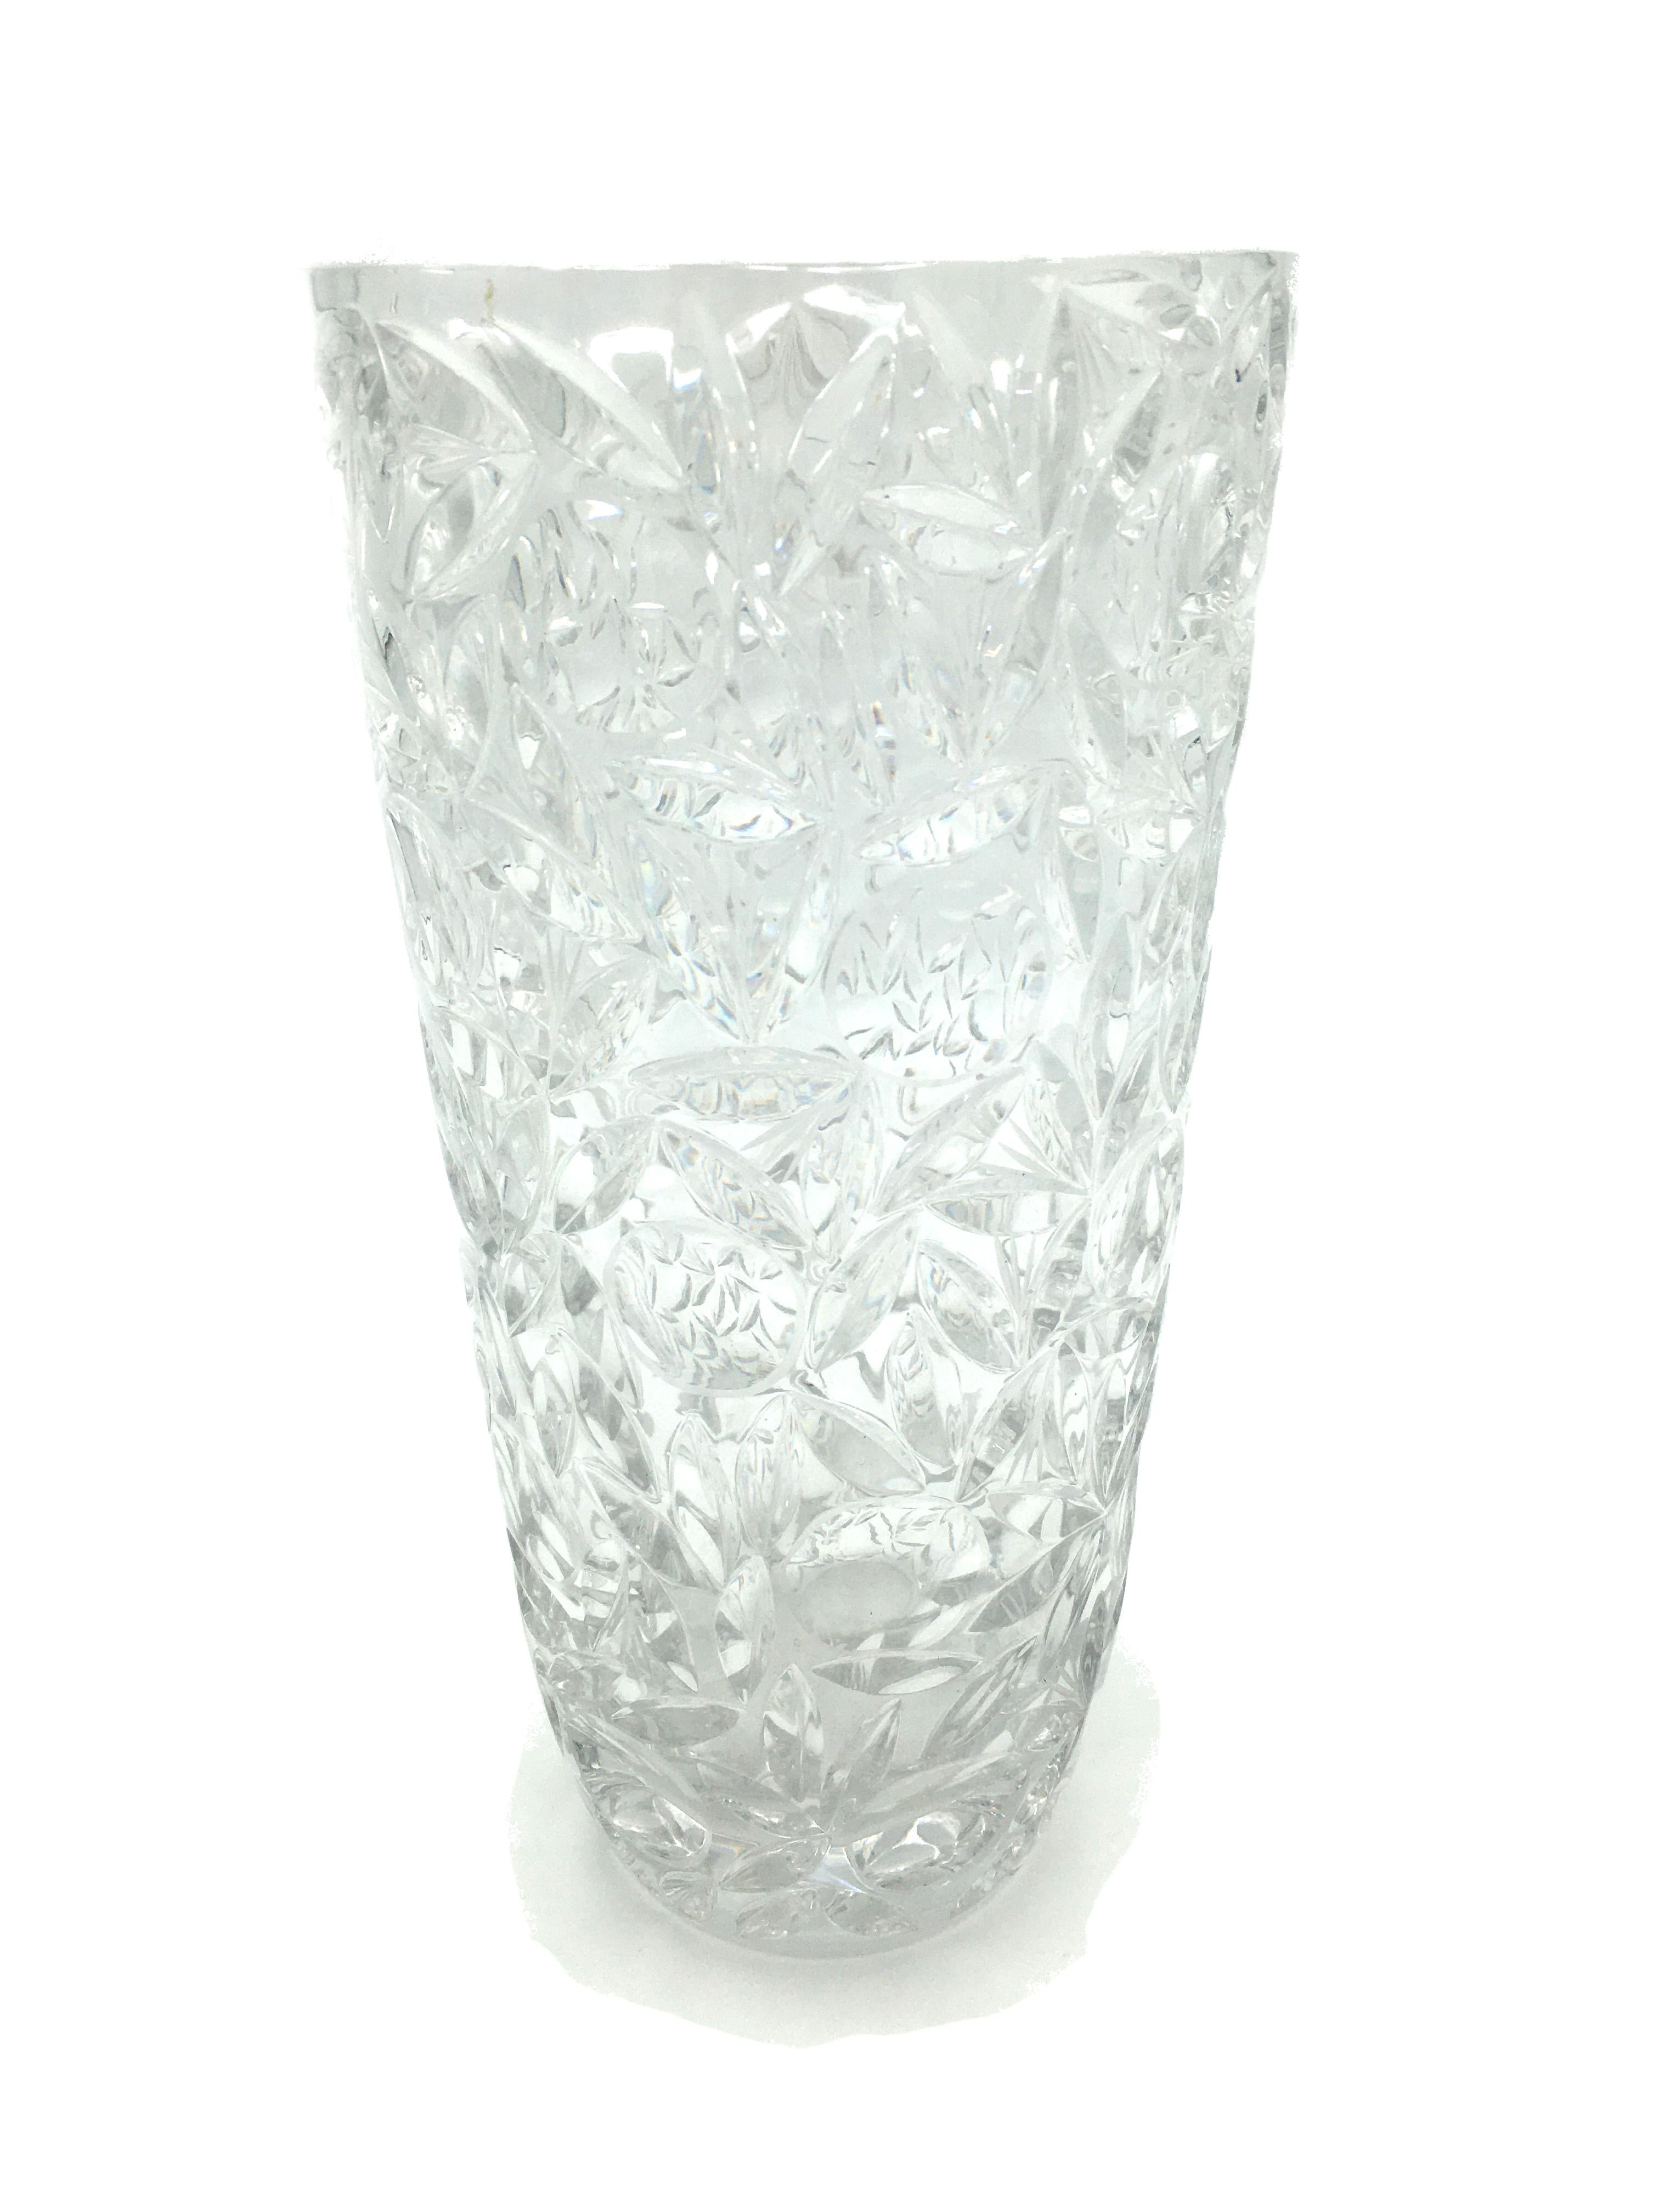 antique lead crystal vase